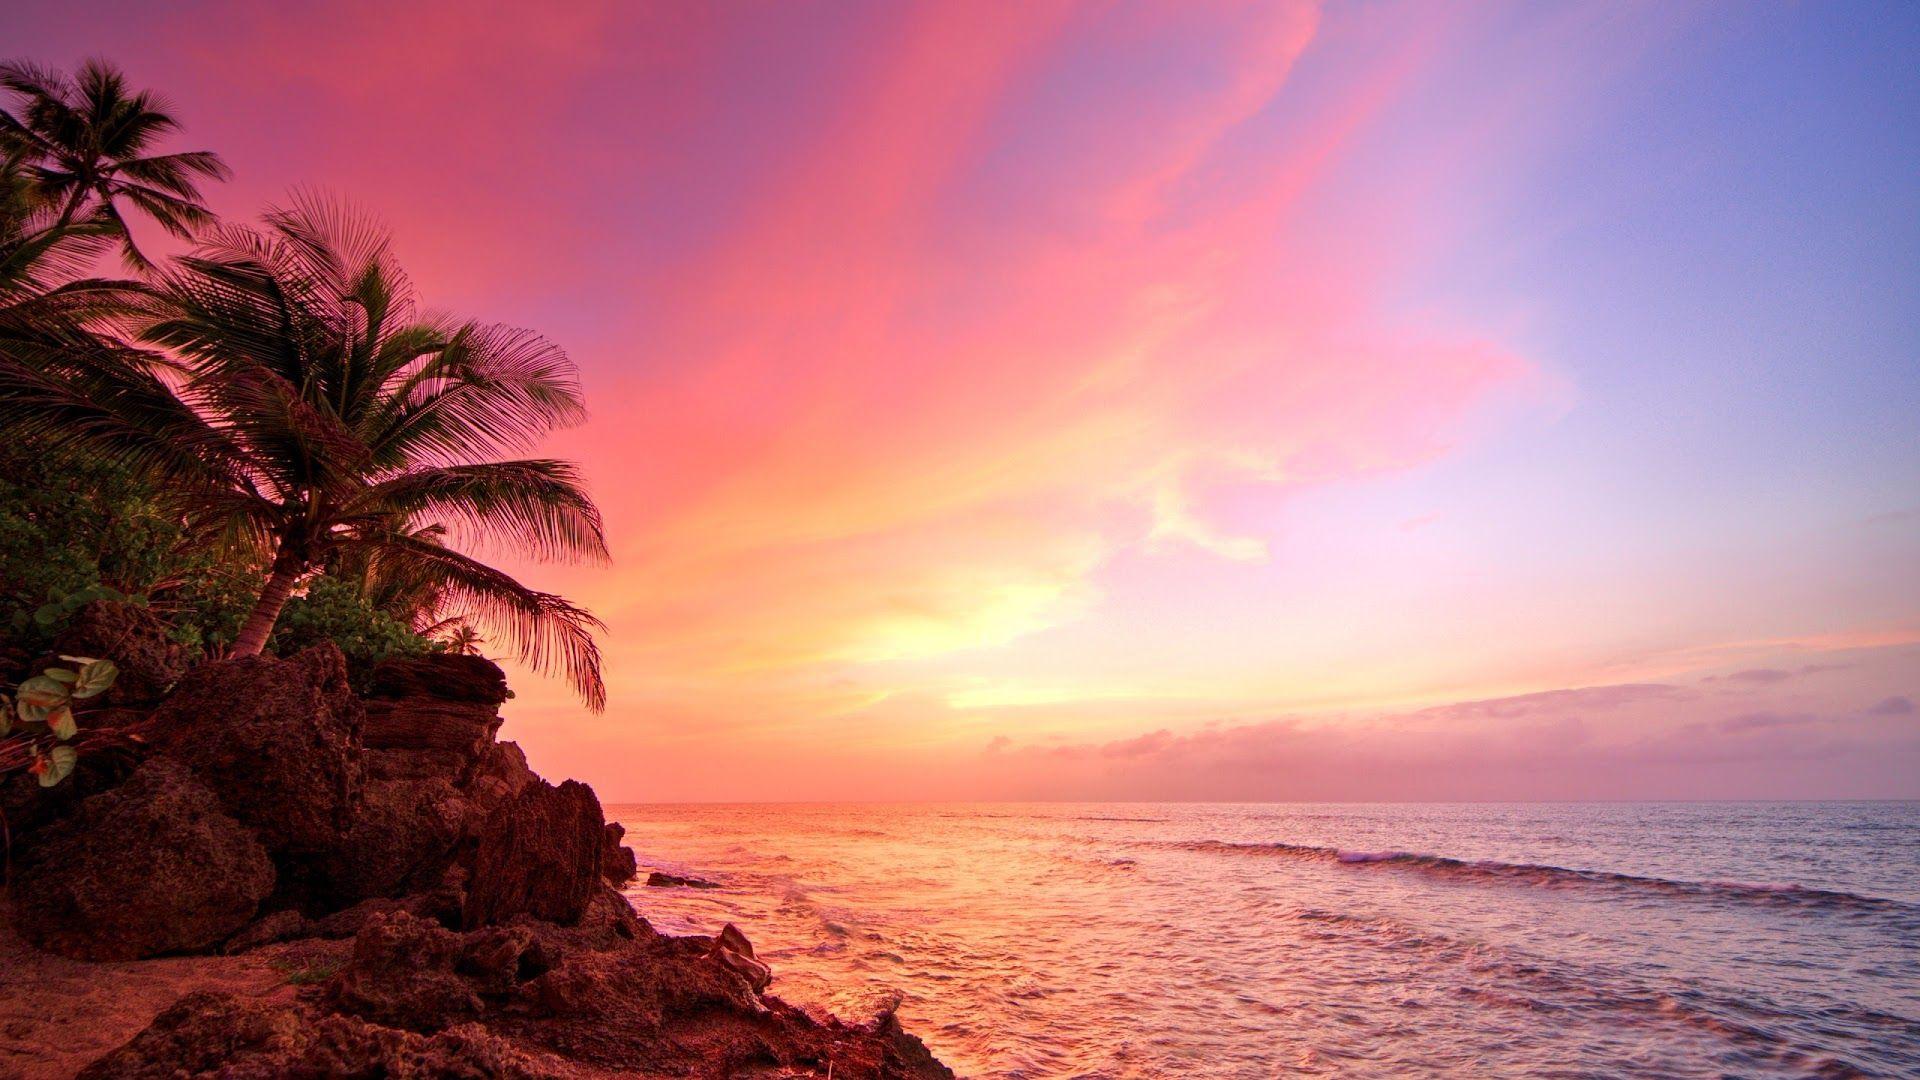 Puerto Rico Sunset Desktop Wallpapers Top Free Puerto Rico Sunset